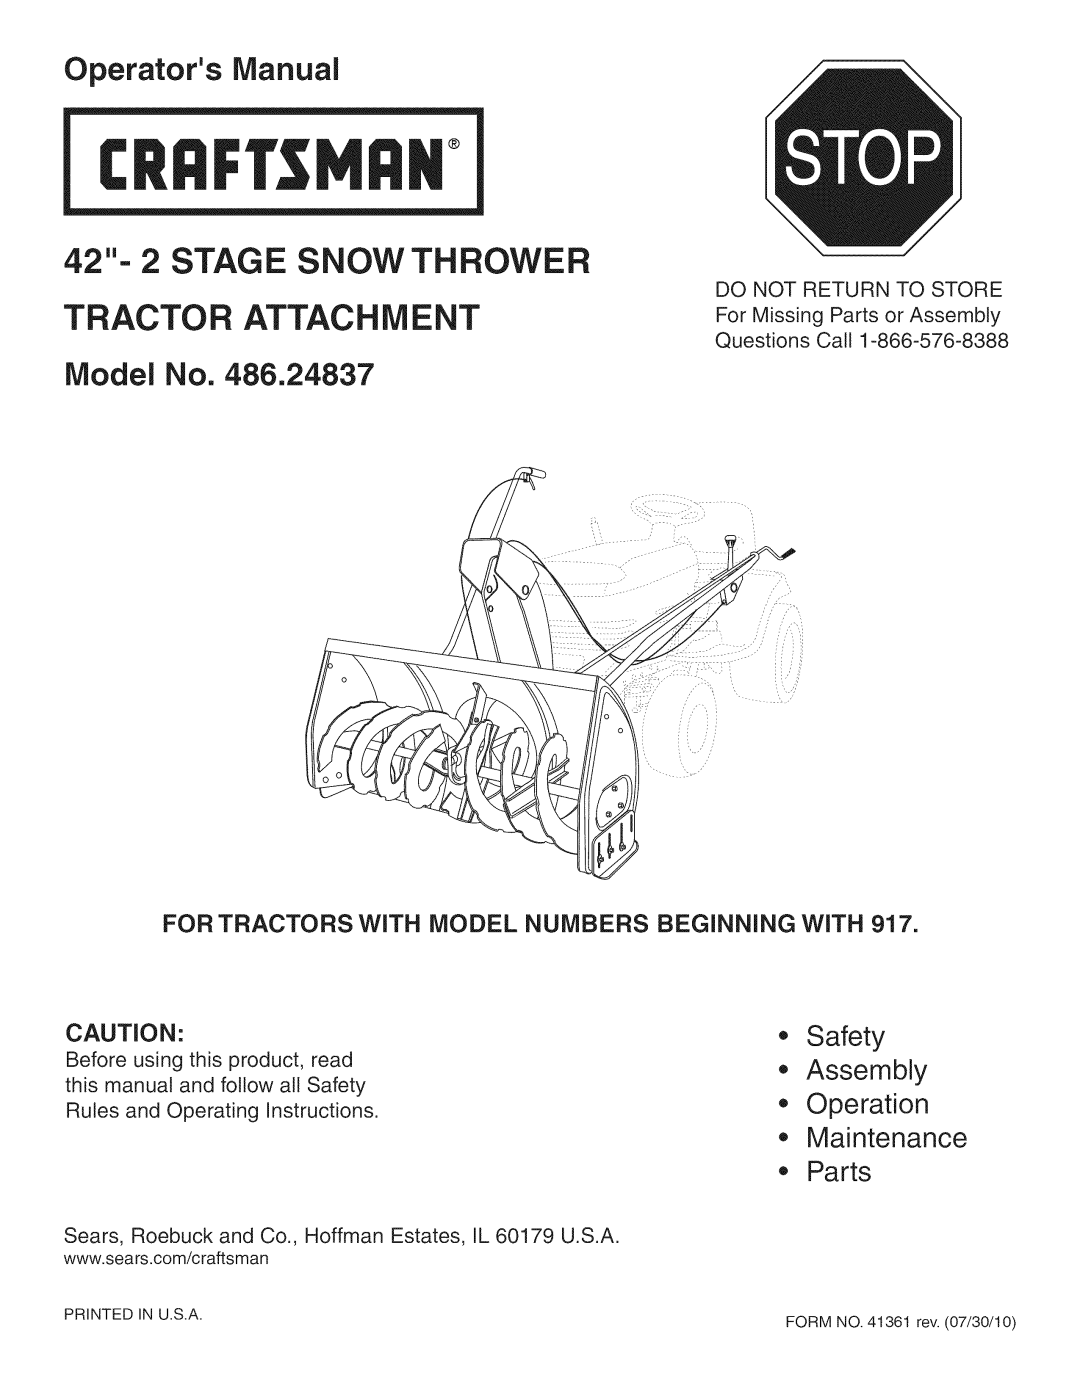 Craftsman 486.24837 manual Operators IVlanuai, IVlodei No, Safety, Assembly Operation Maintenance Parts, CRRFr. MgN 